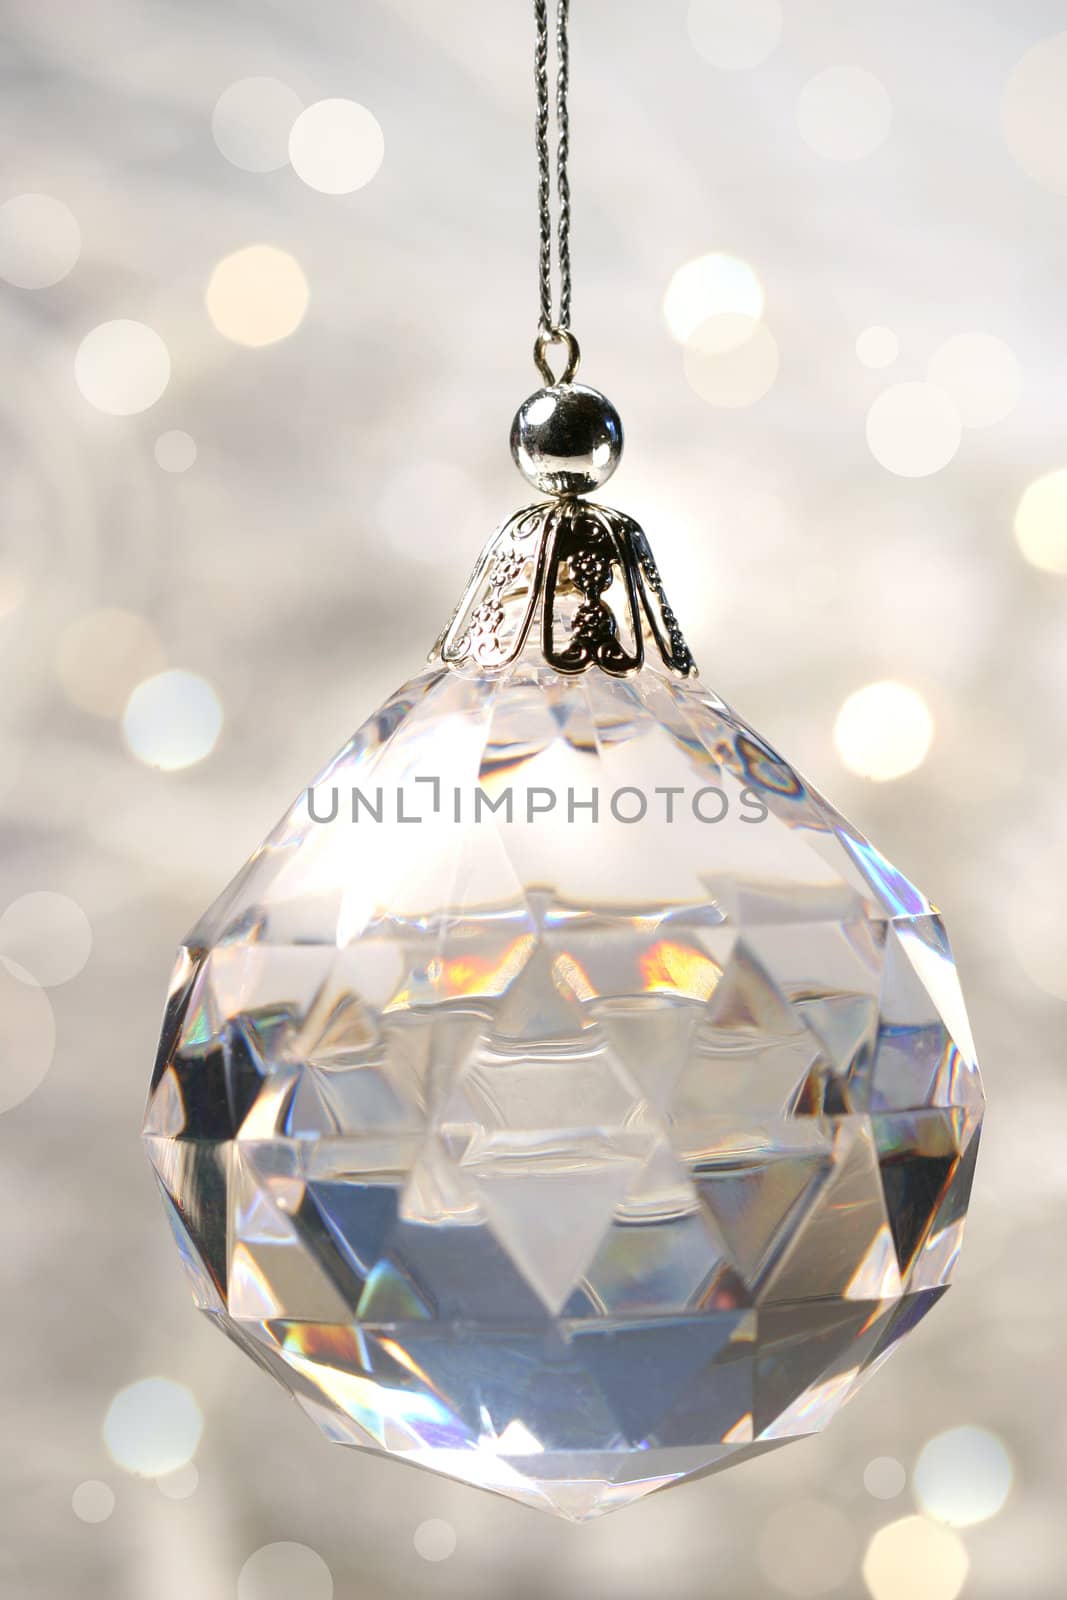 Crystal ornament hanging against shimmering background